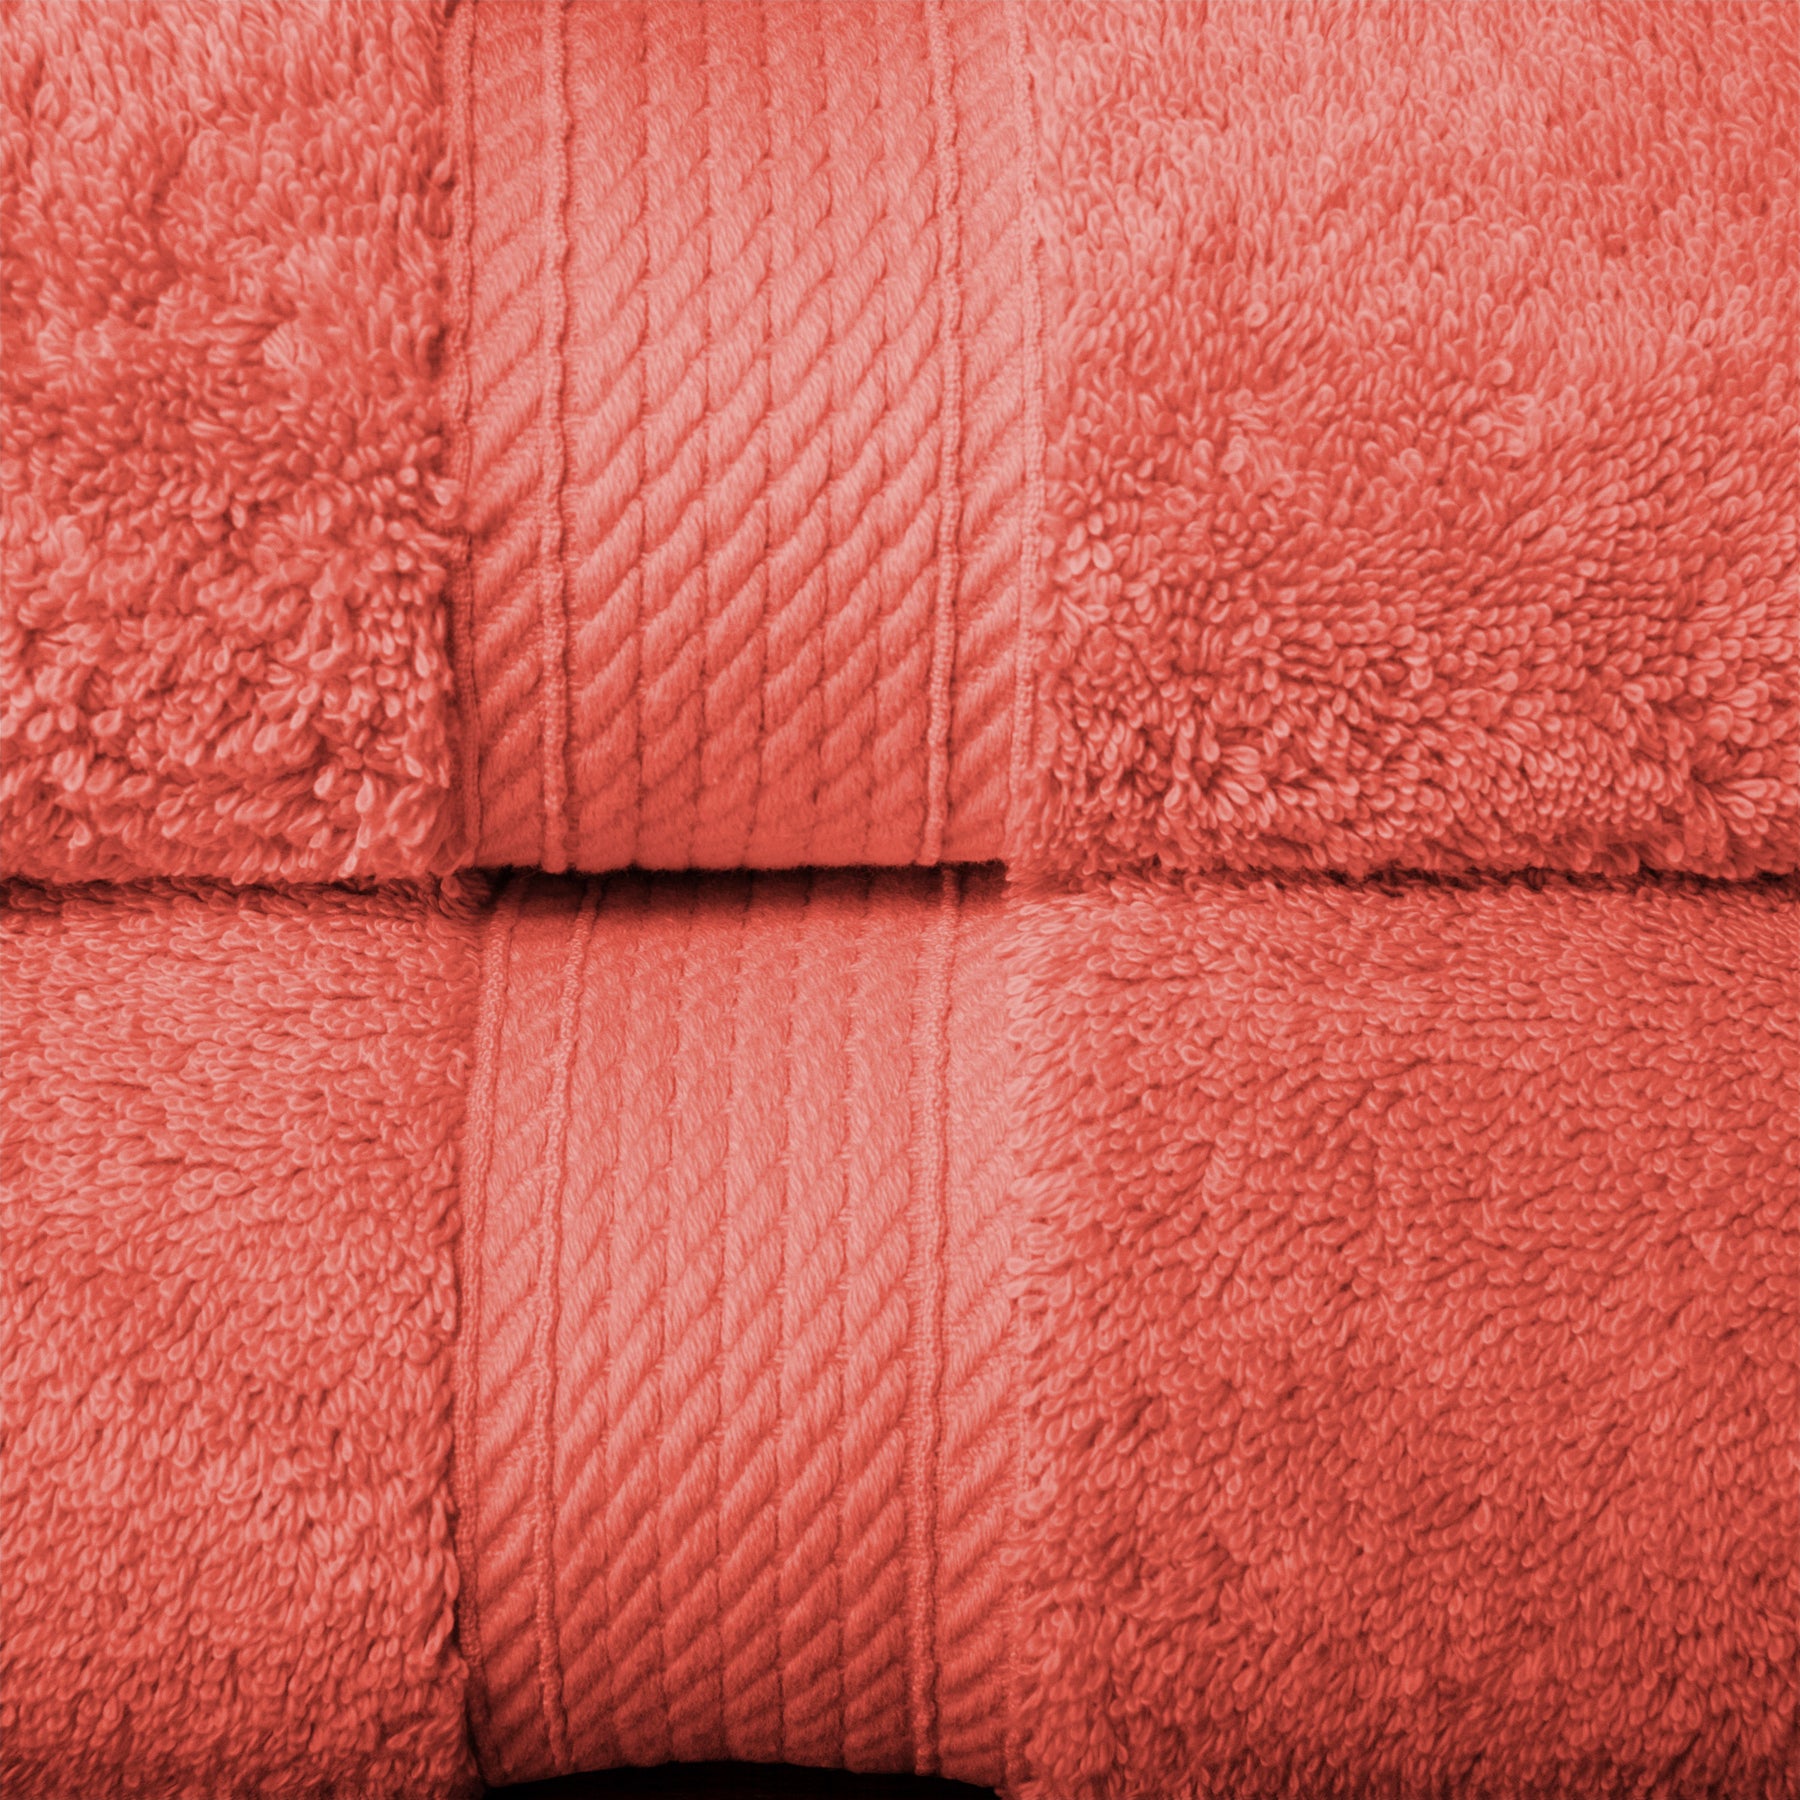 Egyptian Cotton Heavyweight 2 Piece Bath Towel Set - Coral